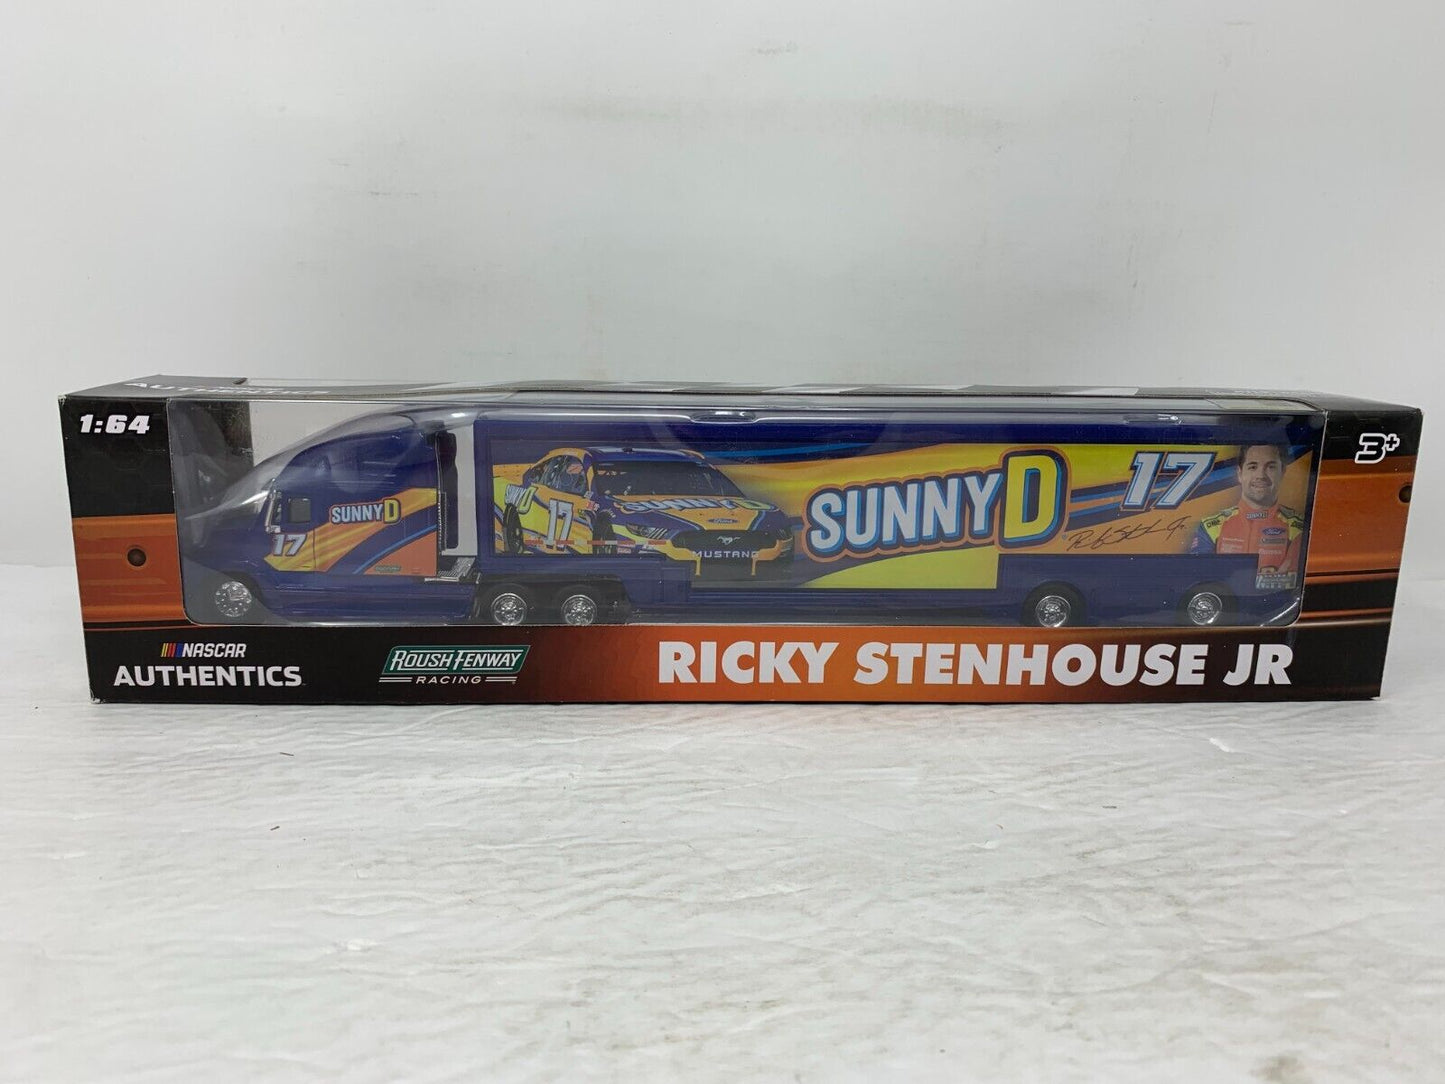 Nascar Authentics #17 Sunny D Ricky Stenhouse Jr. Transport Hauler 1:64 Diecast